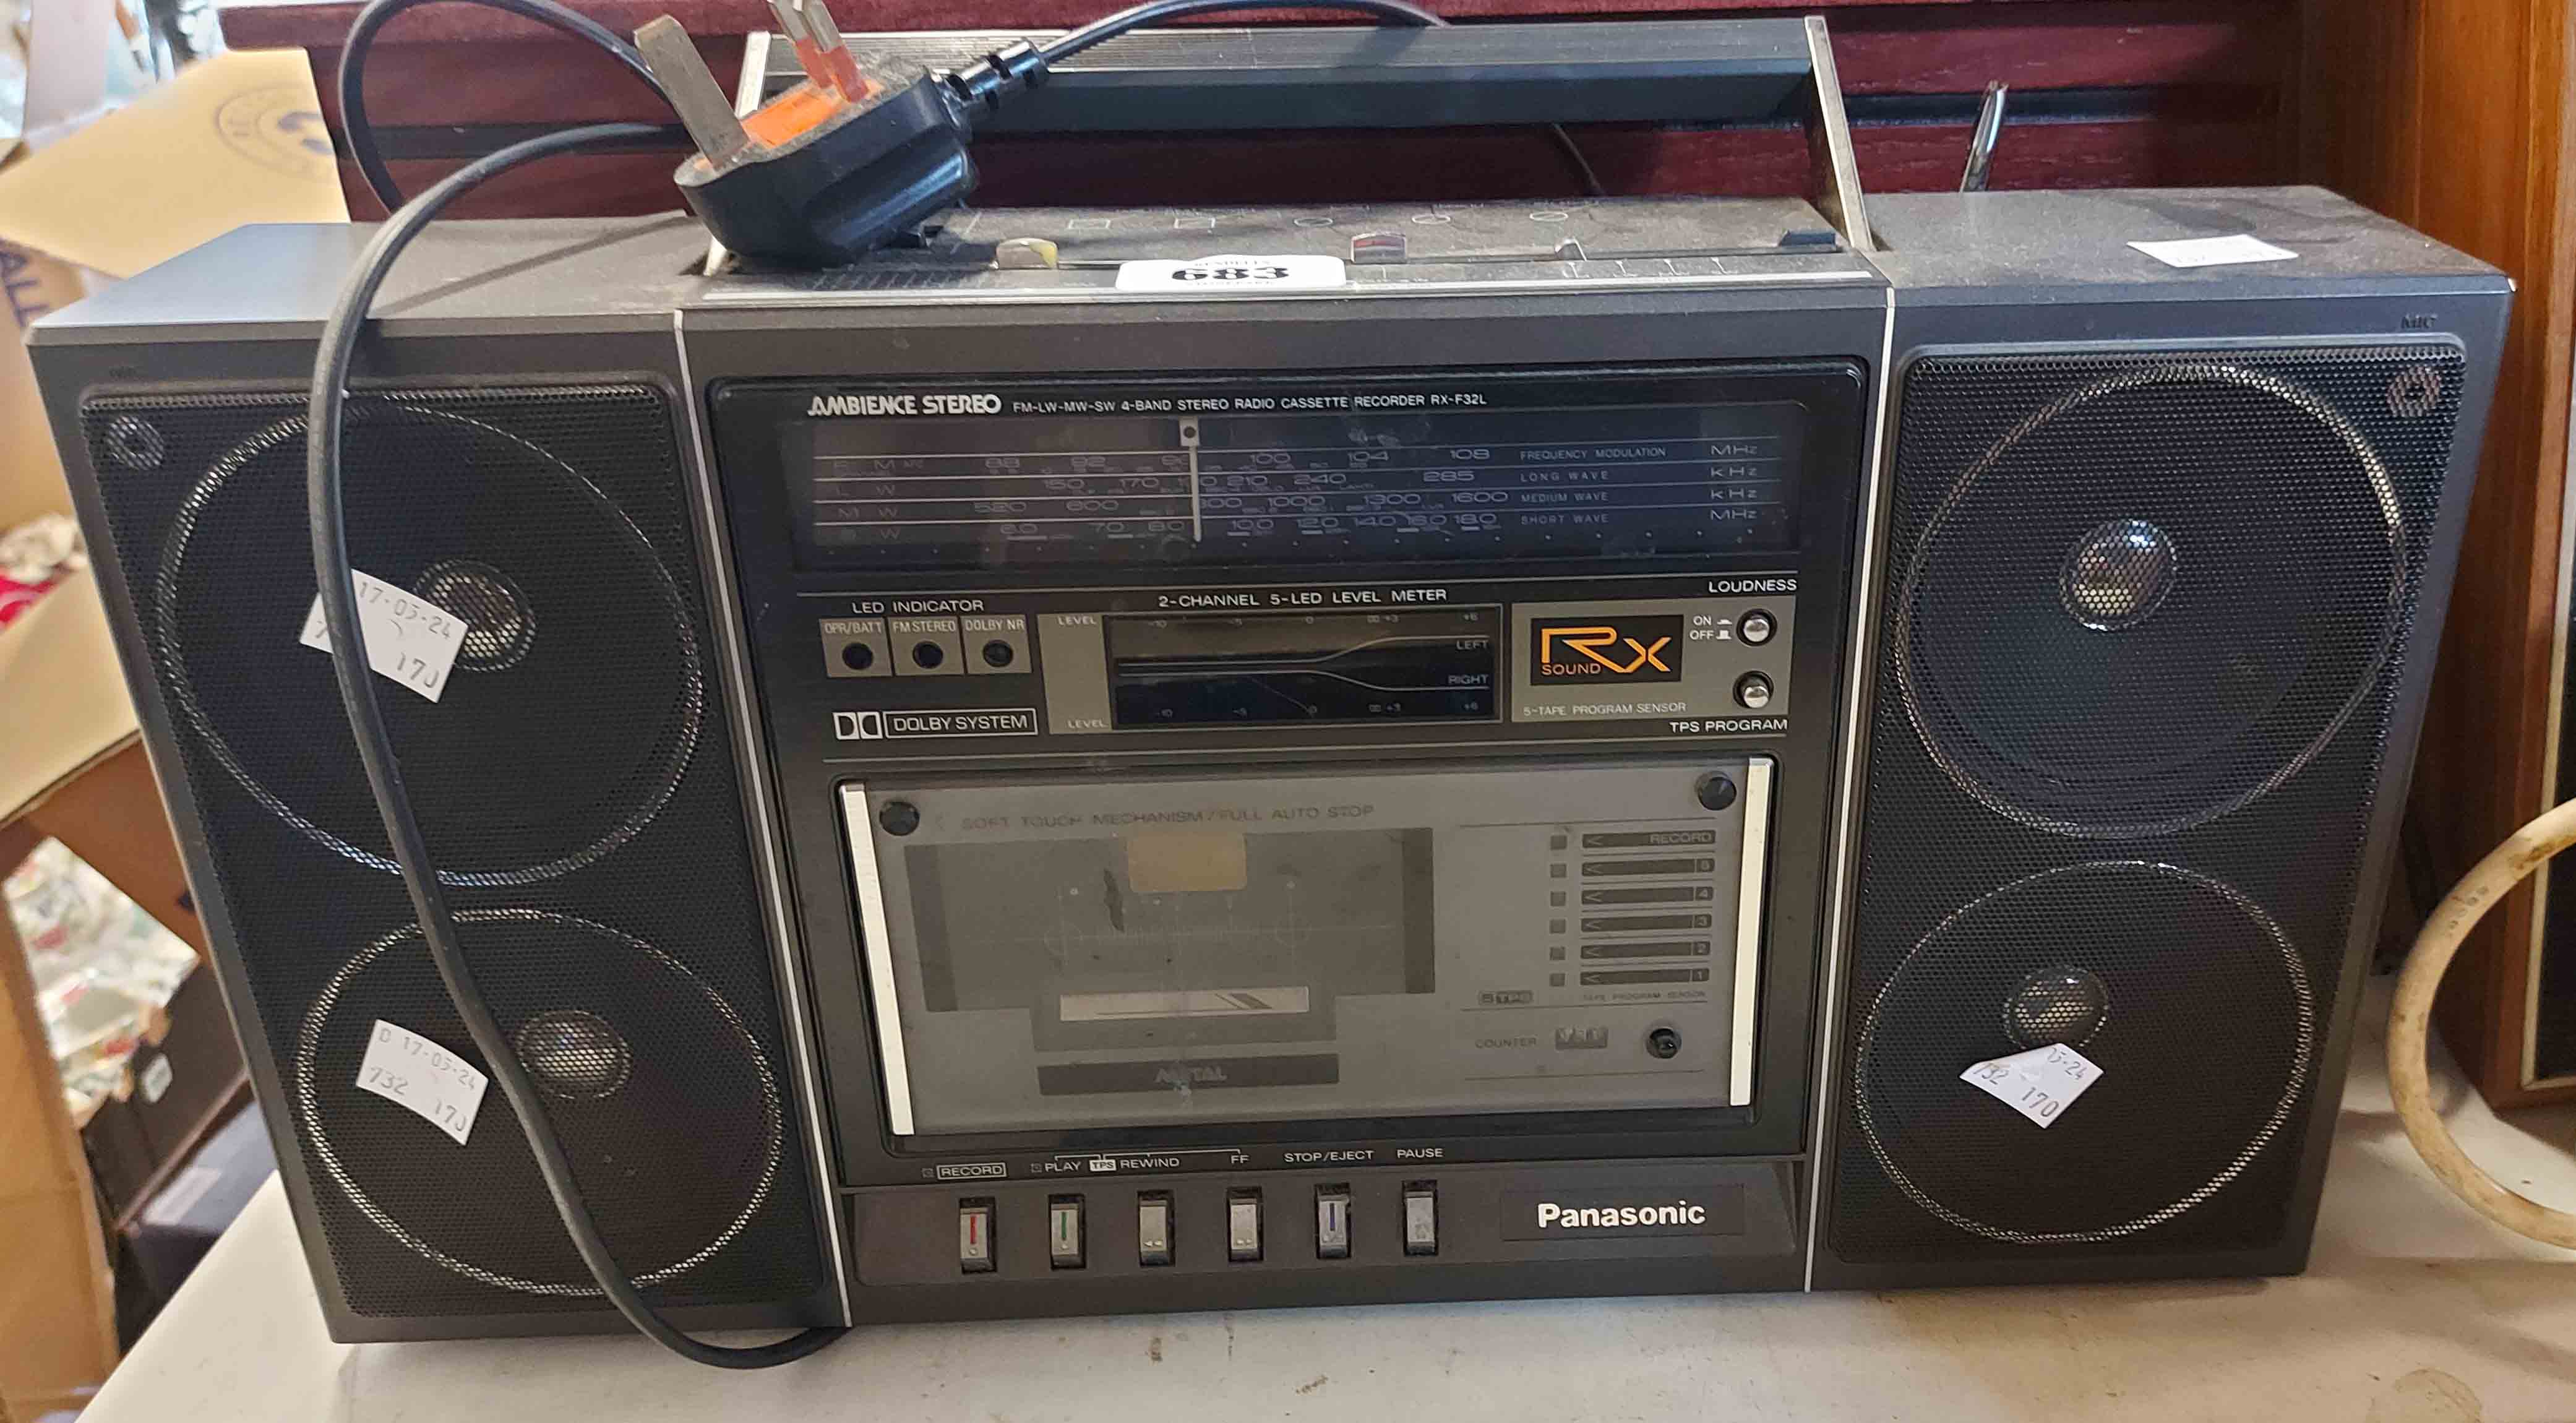 A Panasonic RX-F32LE radio cassette player